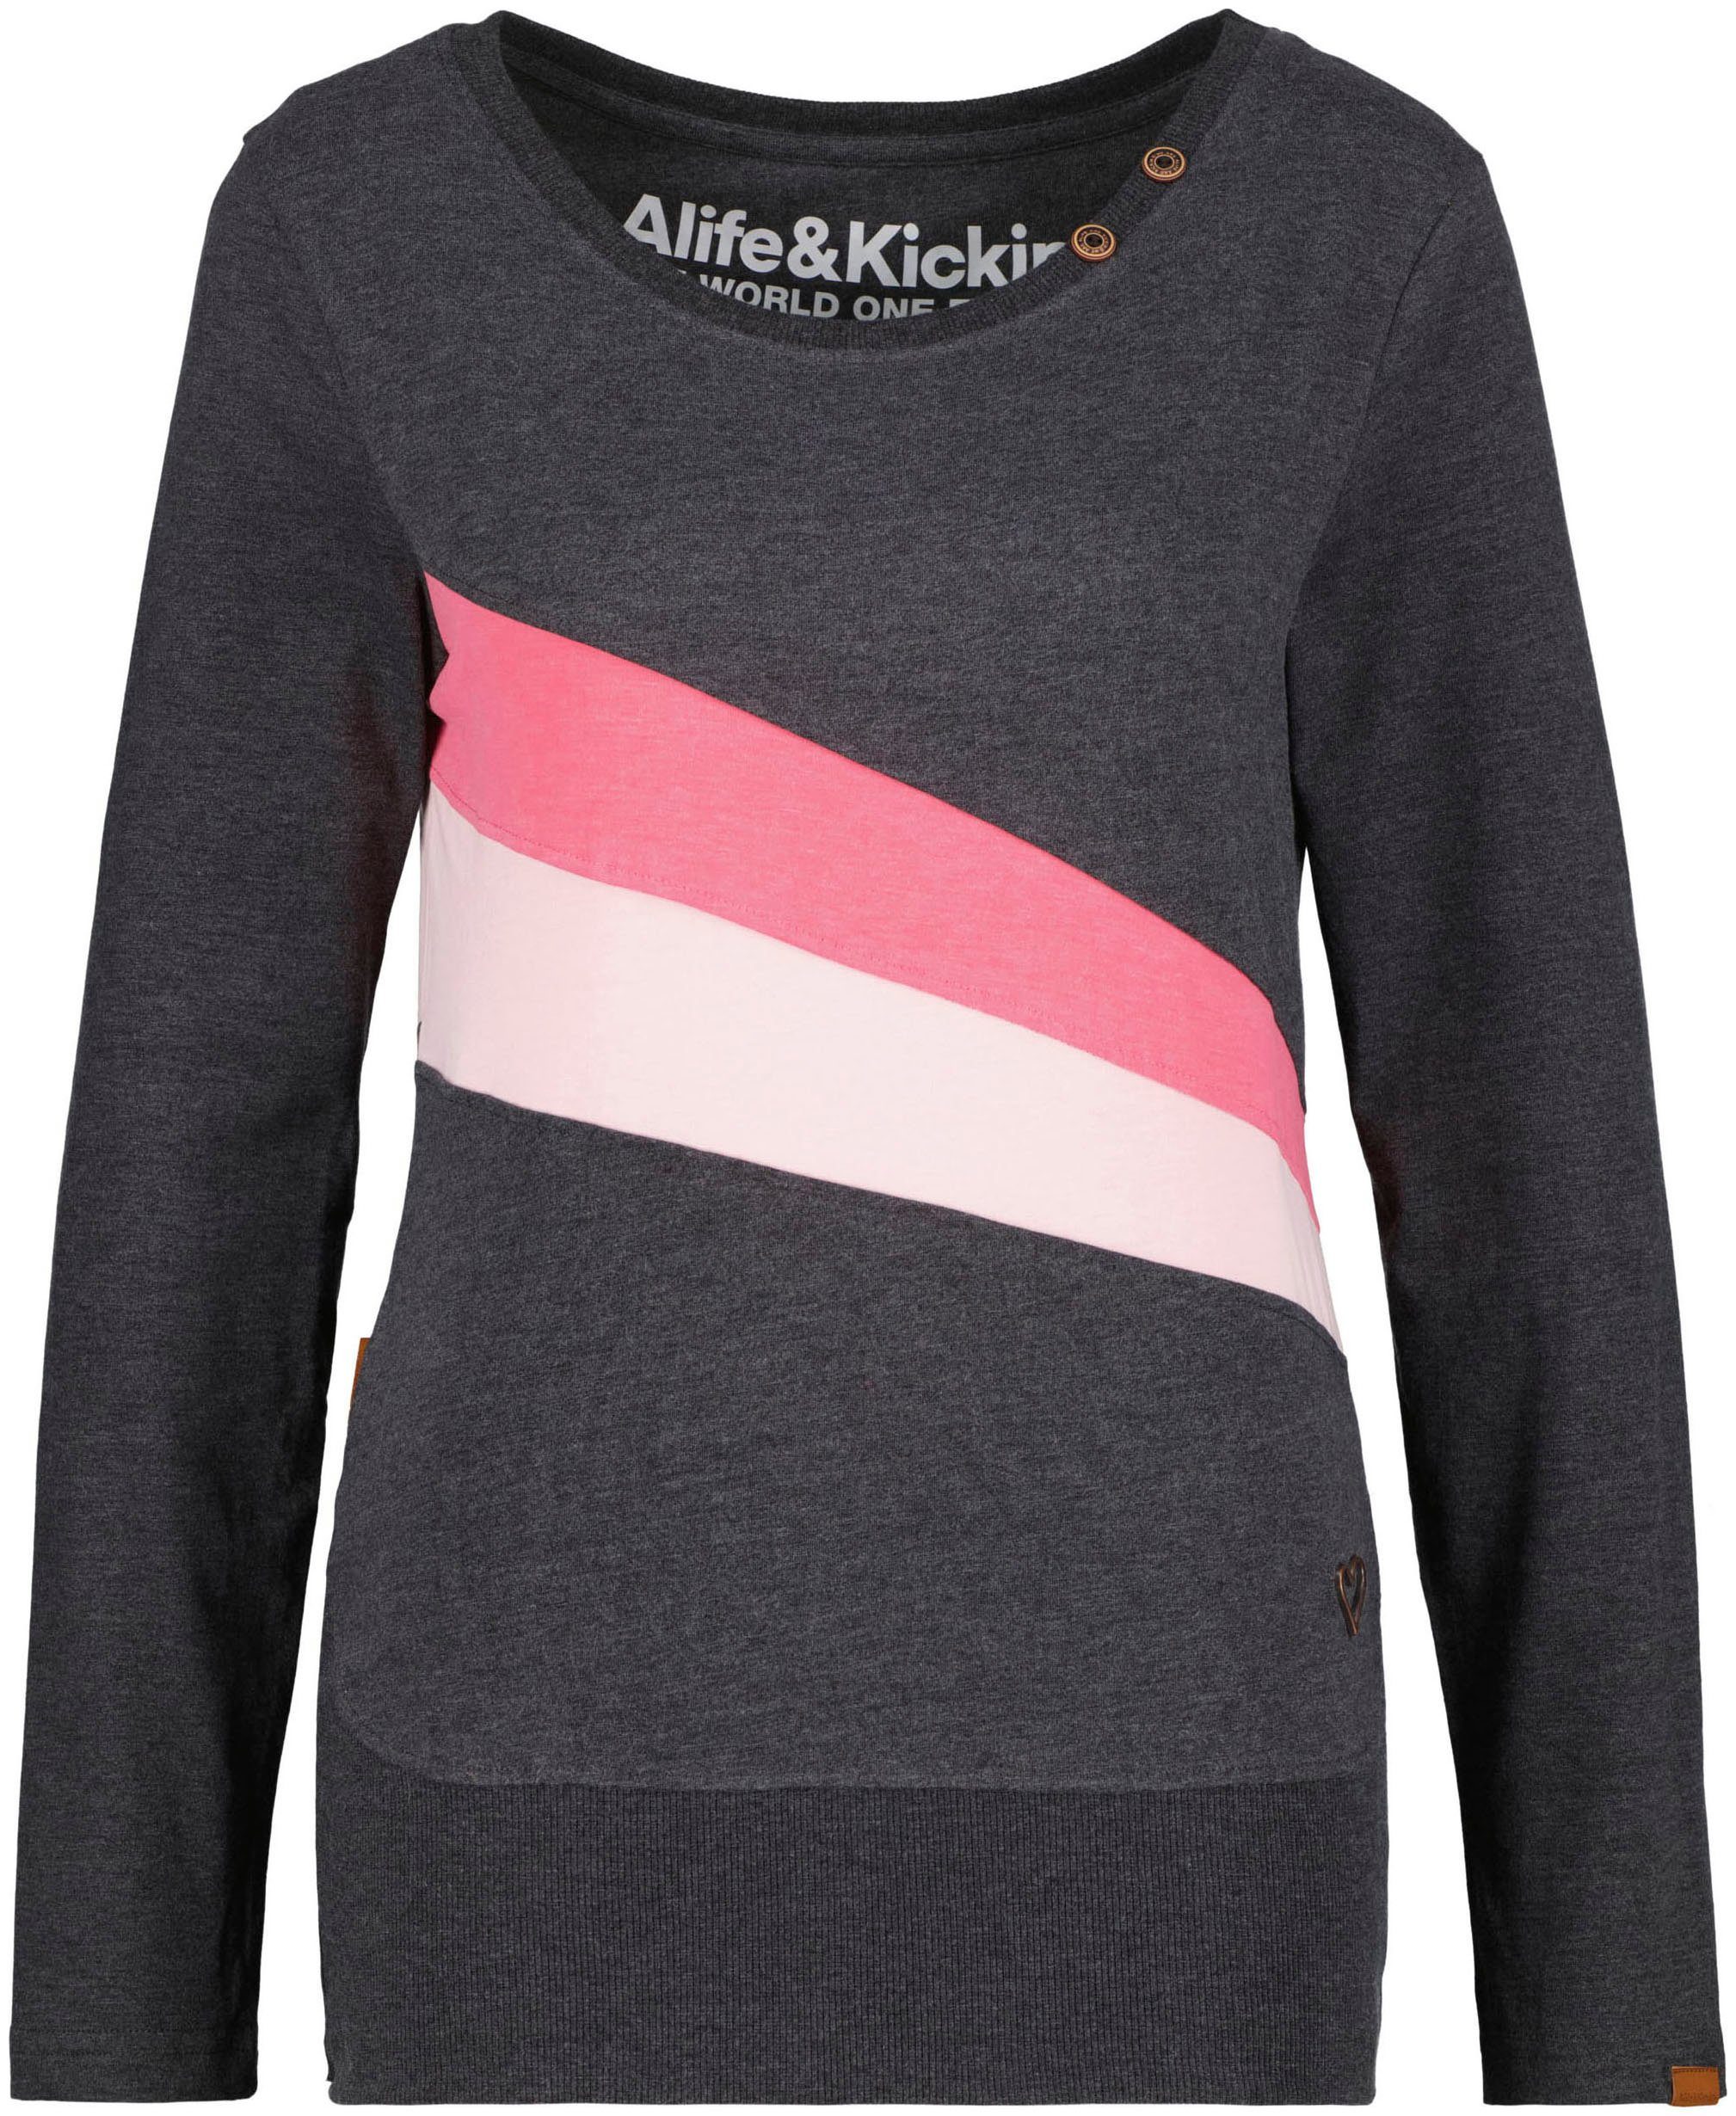 CleaAK moonless Kickin T-Shirt & Alife